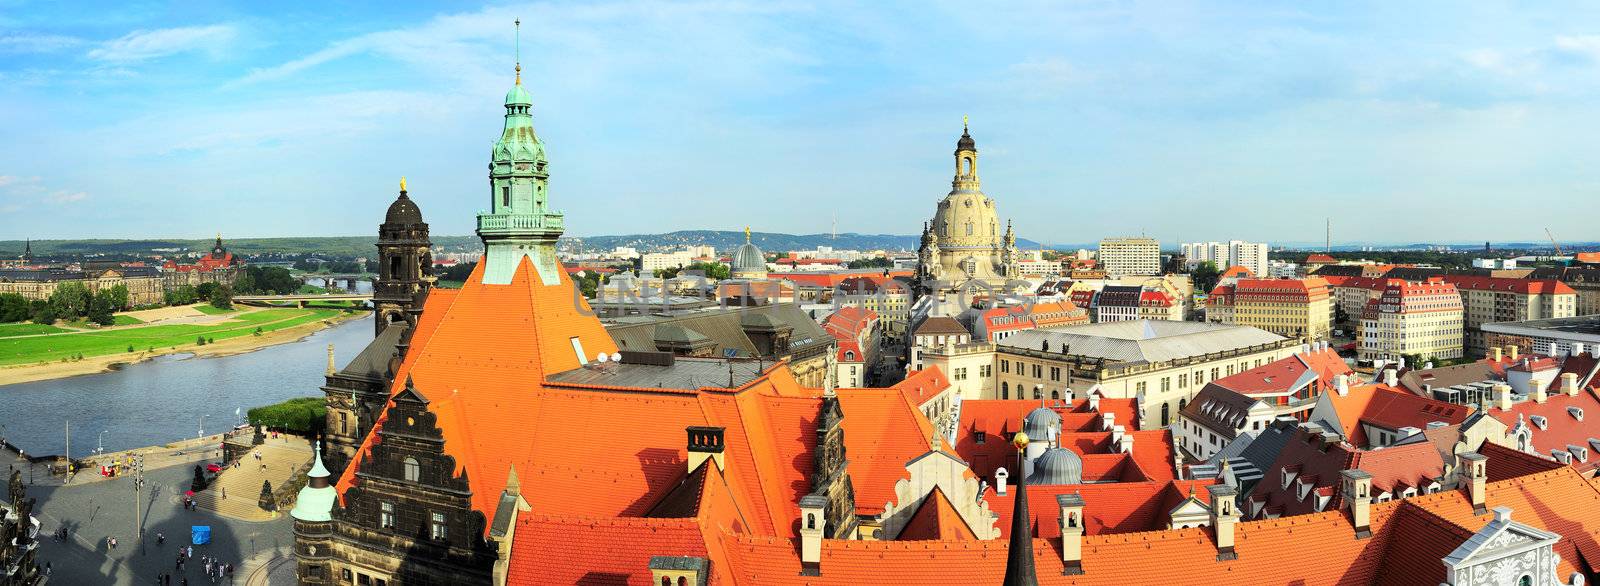 Dresden skyline by joyfull